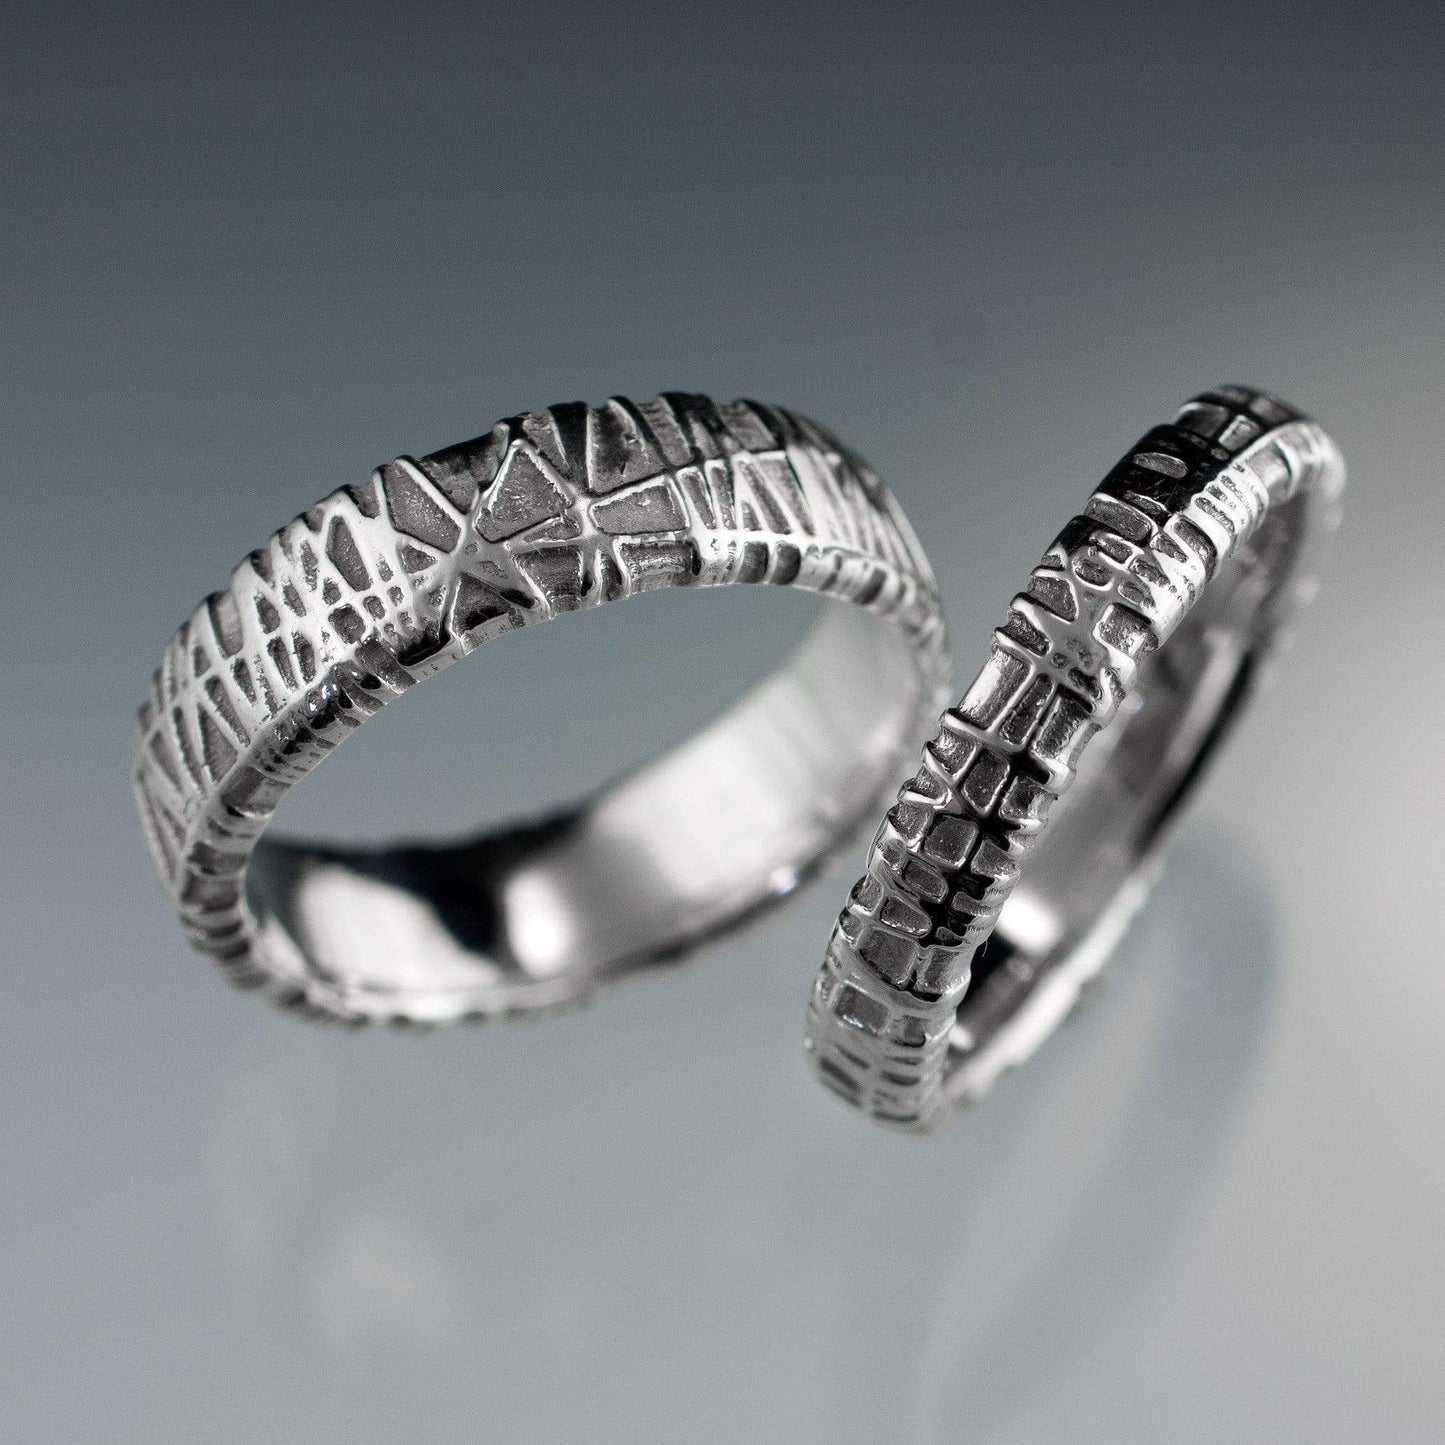 Woven Texture Wedding Bands, Set of 2 Bird Nest Rings Ring Set by Nodeform